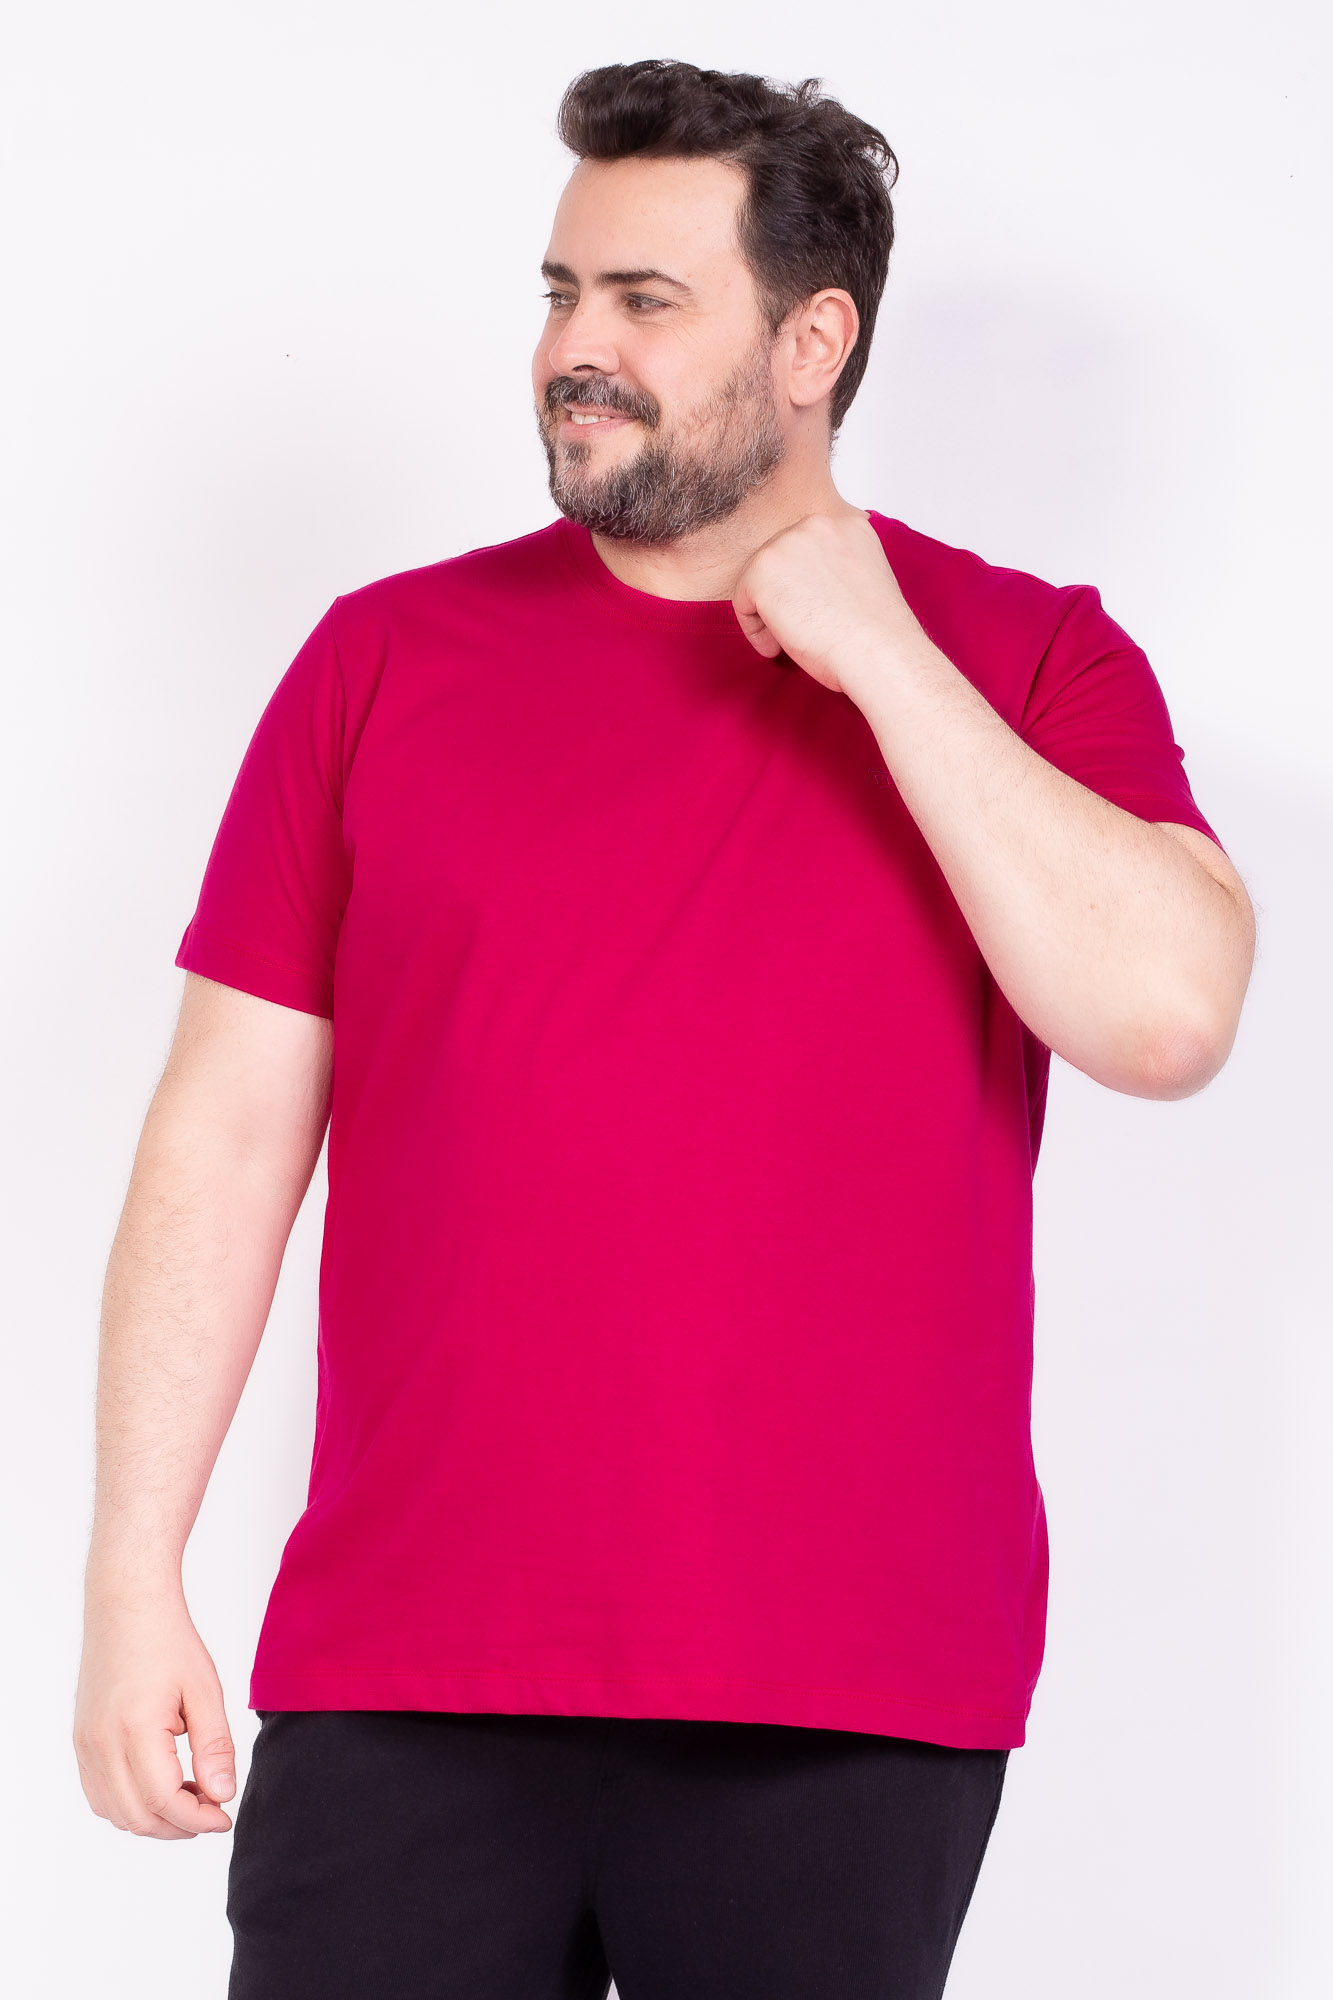 Camiseta Básica 100% algodão rosa dark Plus size